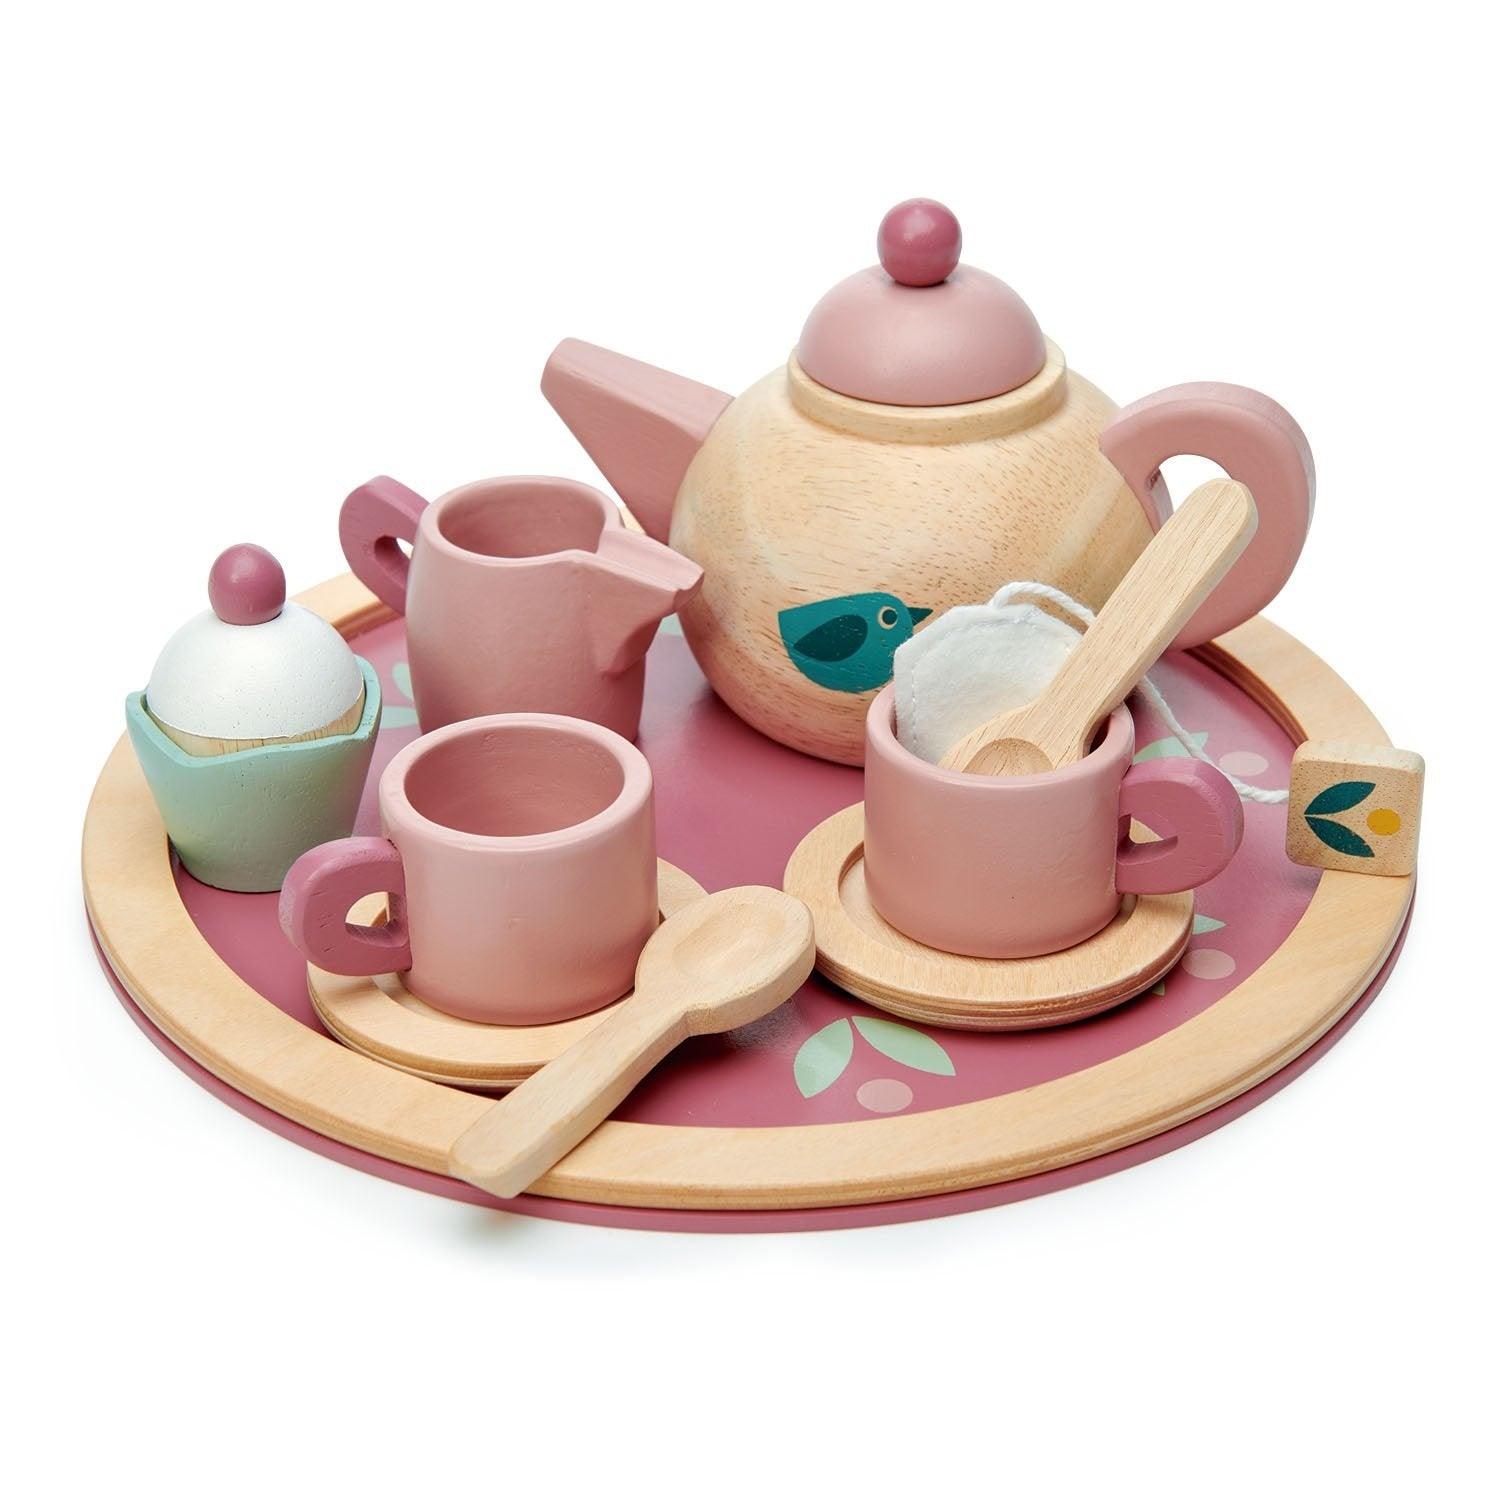 Giocattoli teneri: set di tè birdie Servizio di tè in legno